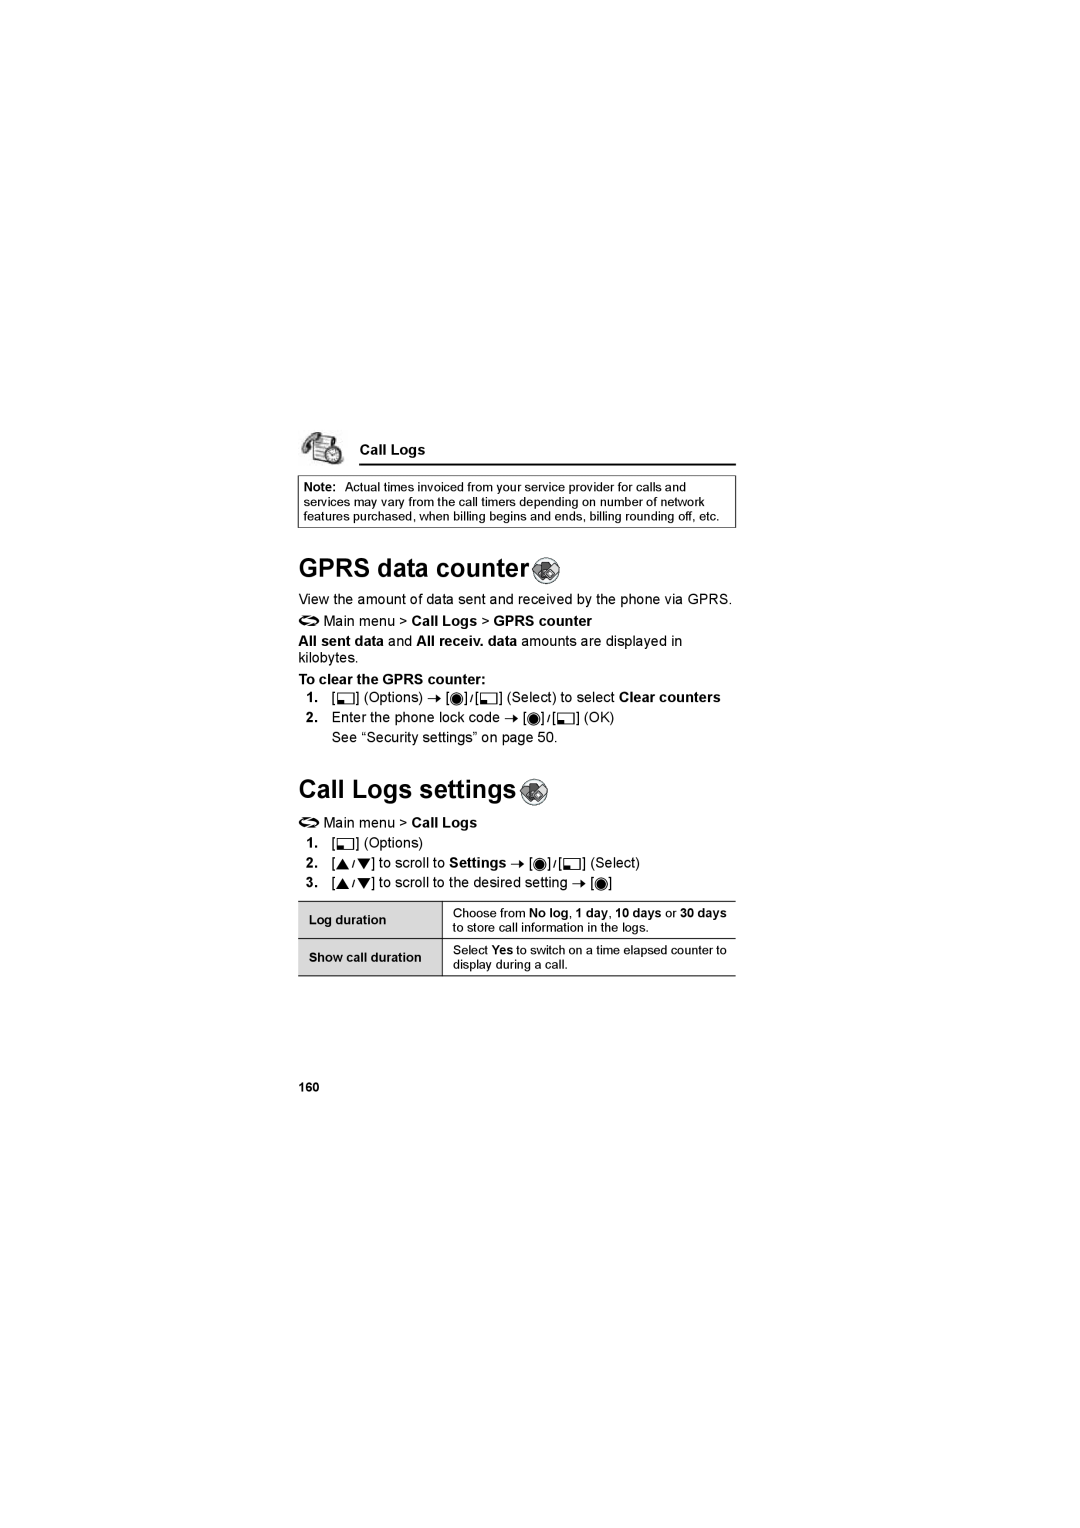 Panasonic EB-X800 manual GPRS data counter, Call Logs settings, To clear the GPRS counter 